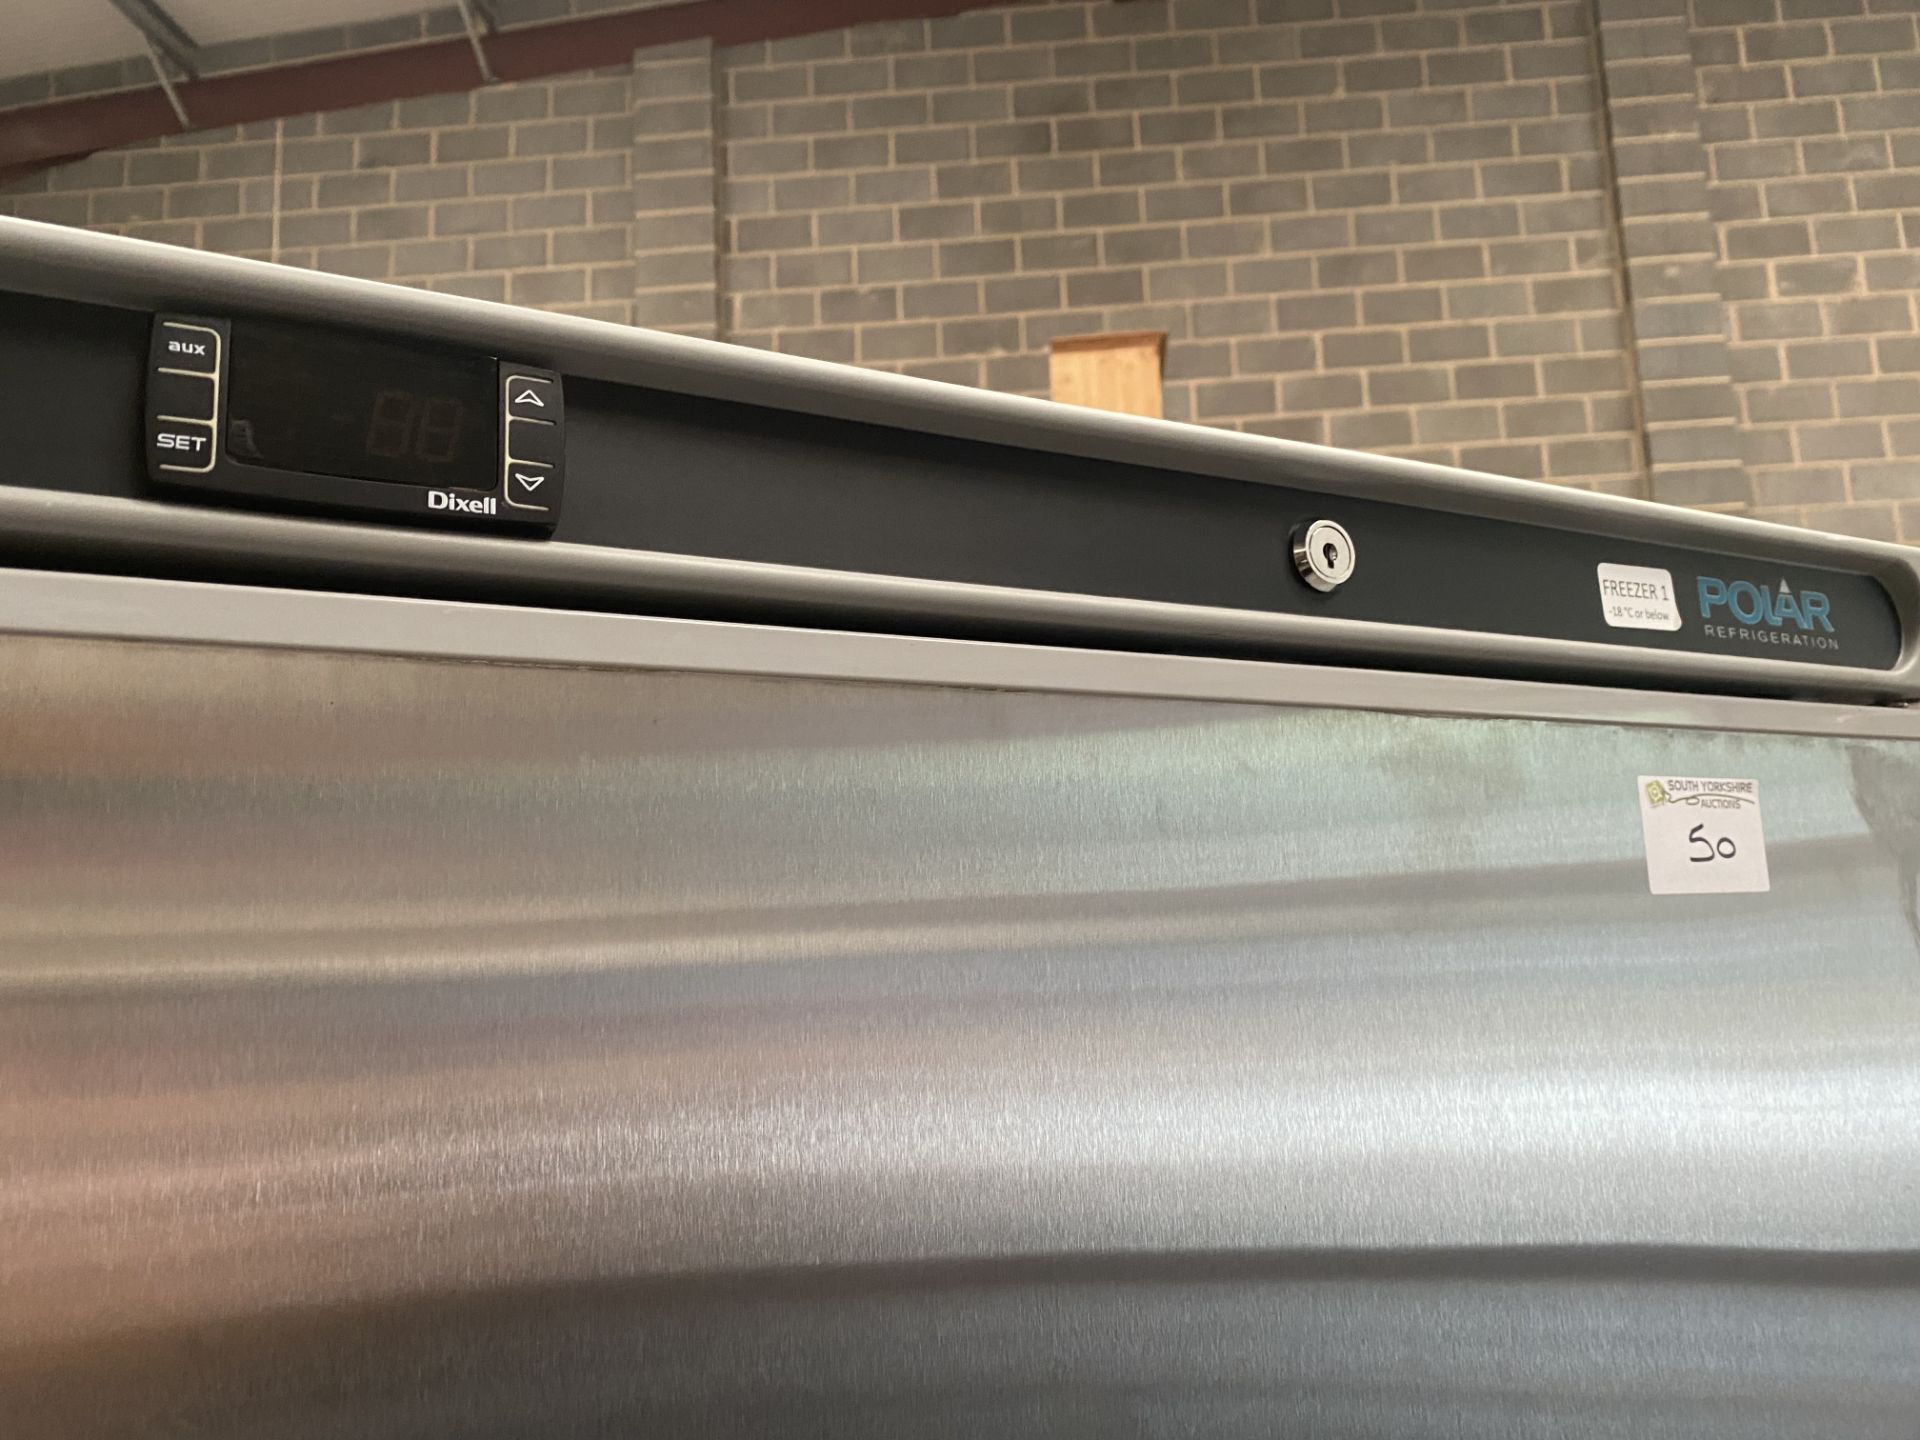 Polar Stainless Steel Upright Freezer - Image 3 of 3